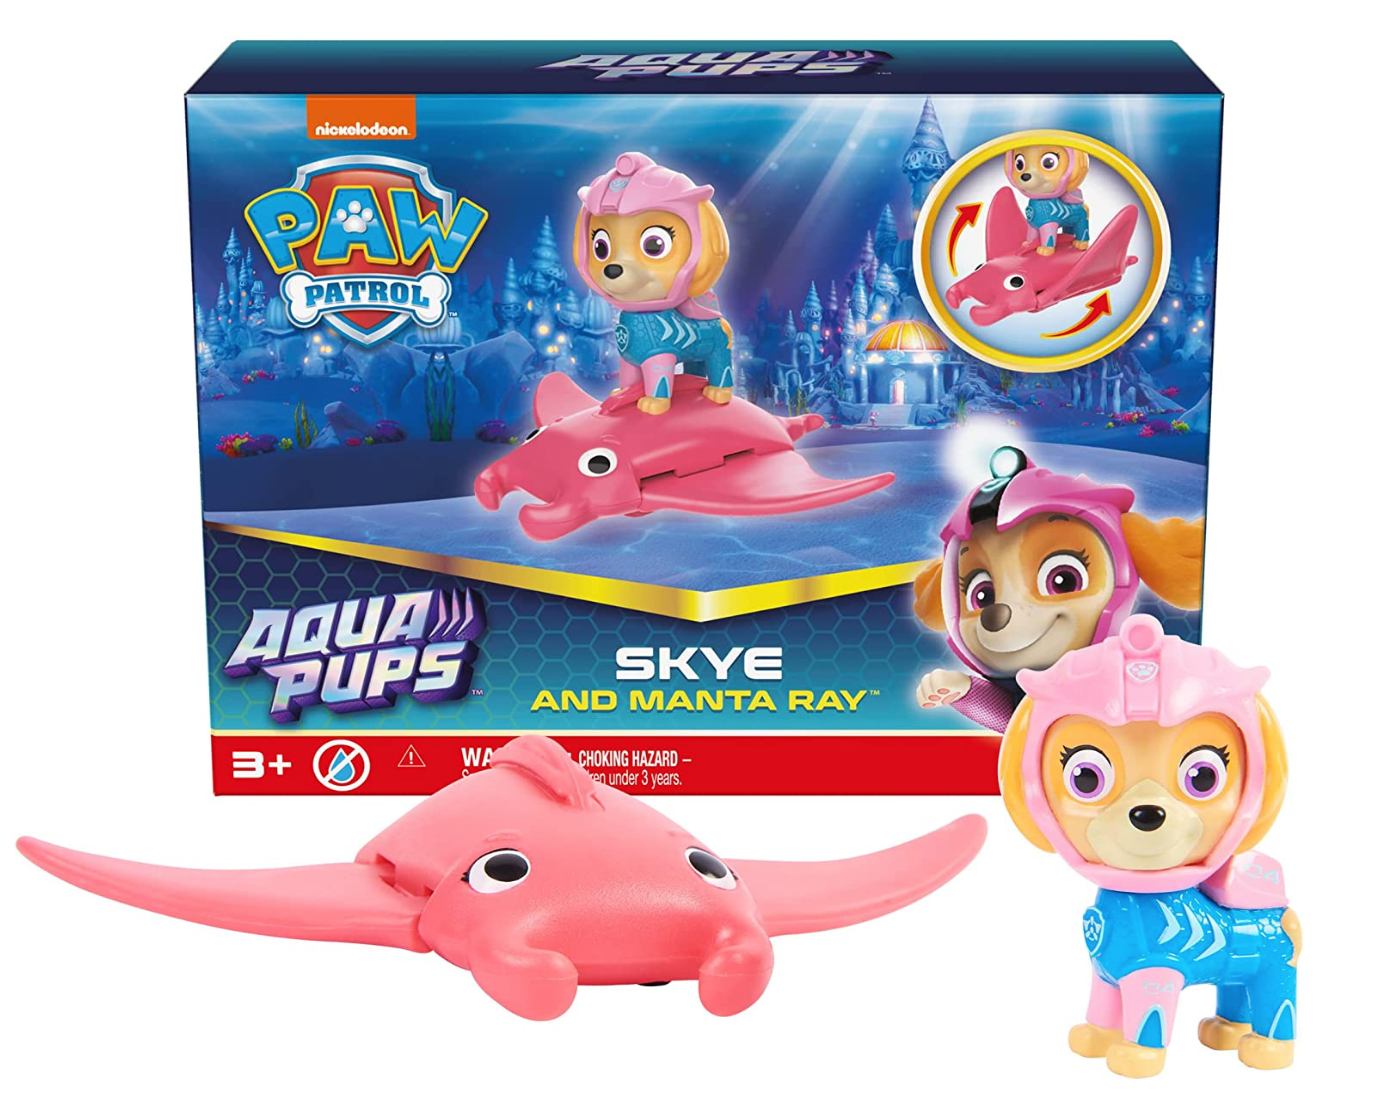 PAW Patrol Aqua Pups Skye and Manta Ray Action Figure Set Kid Toy New With Box